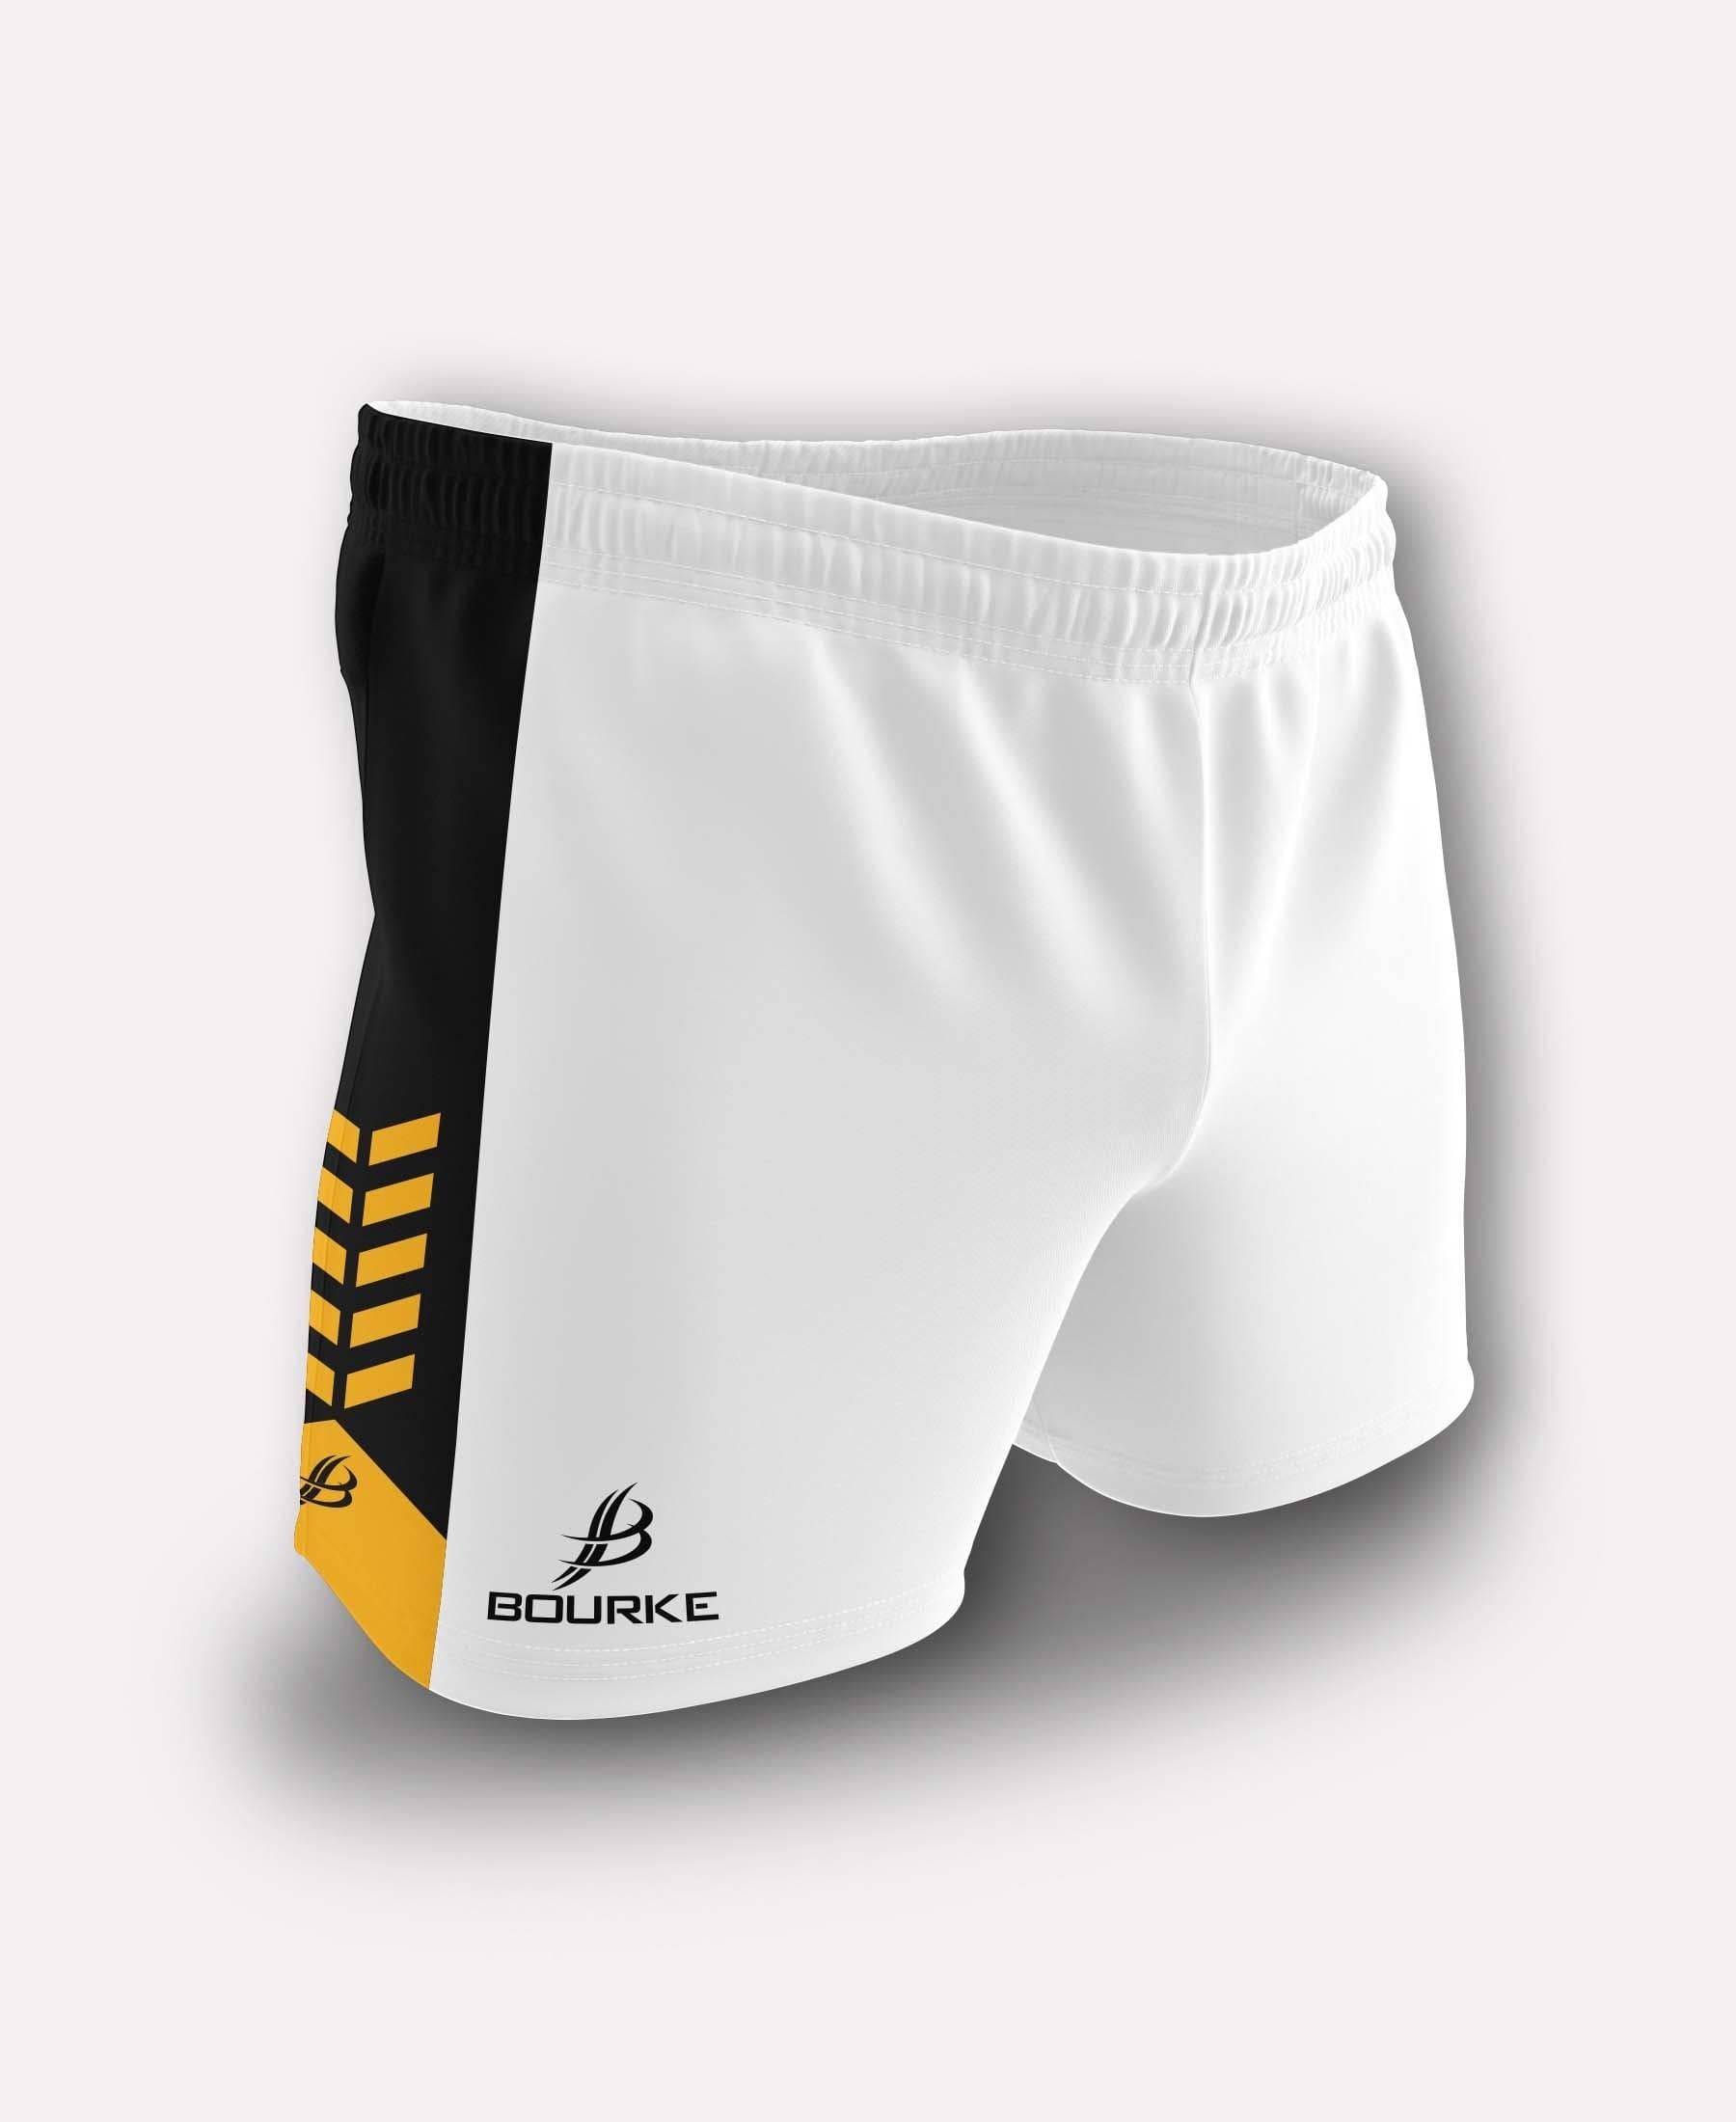 Chevron Adult Shorts (White/Black/Amber) - Bourke Sports Limited